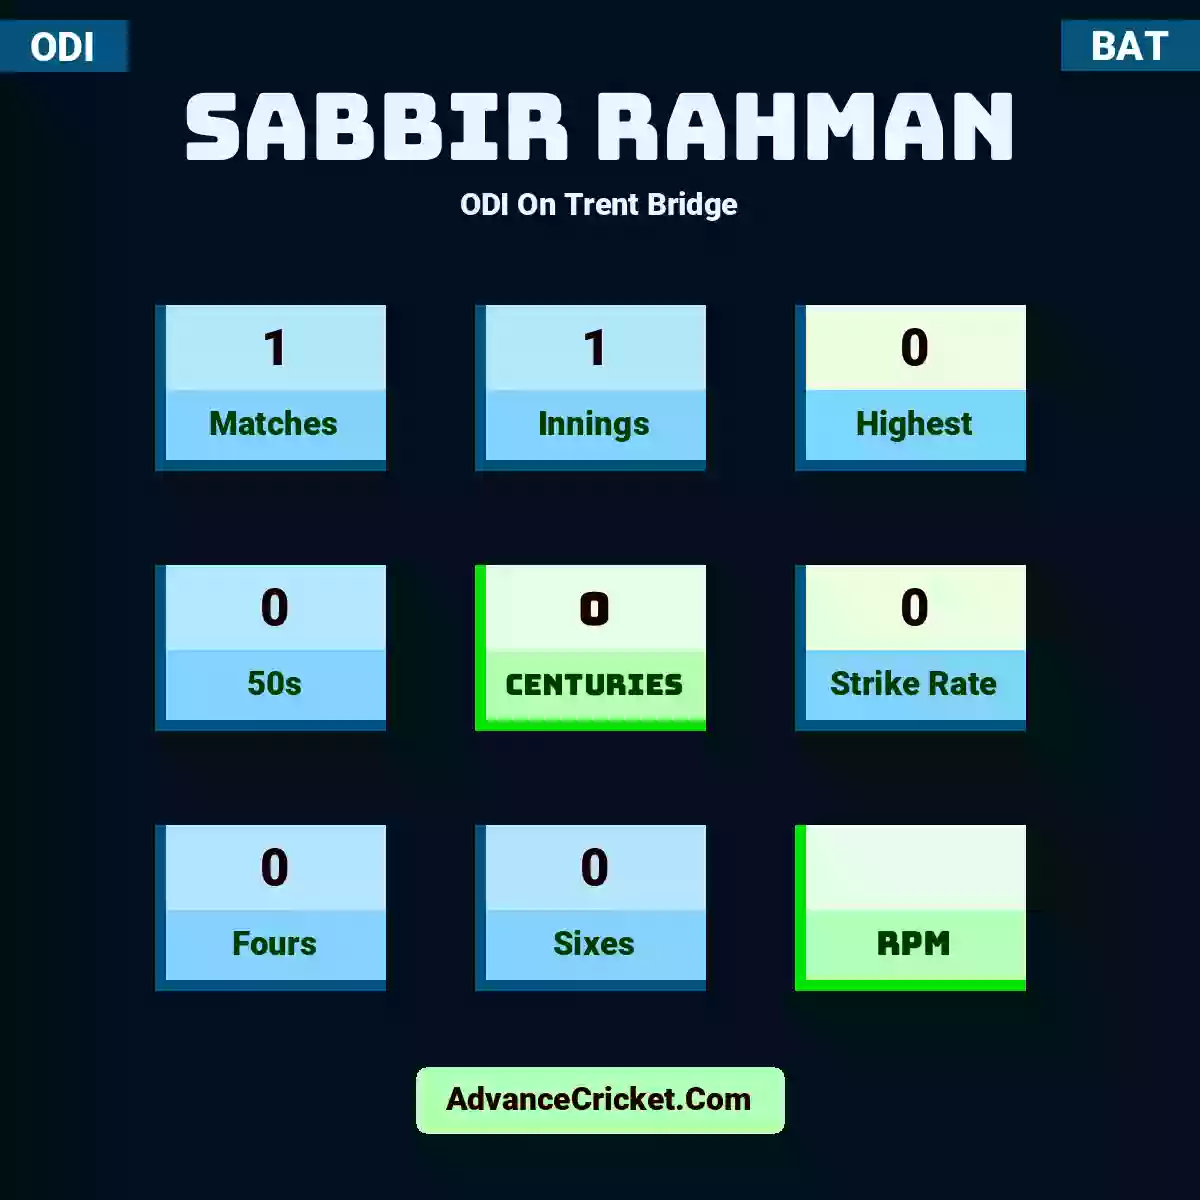 Sabbir Rahman ODI  On Trent Bridge, Sabbir Rahman played 1 matches, scored 0 runs as highest, 0 half-centuries, and 0 centuries, with a strike rate of 0. S.Rahman hit 0 fours and 0 sixes.